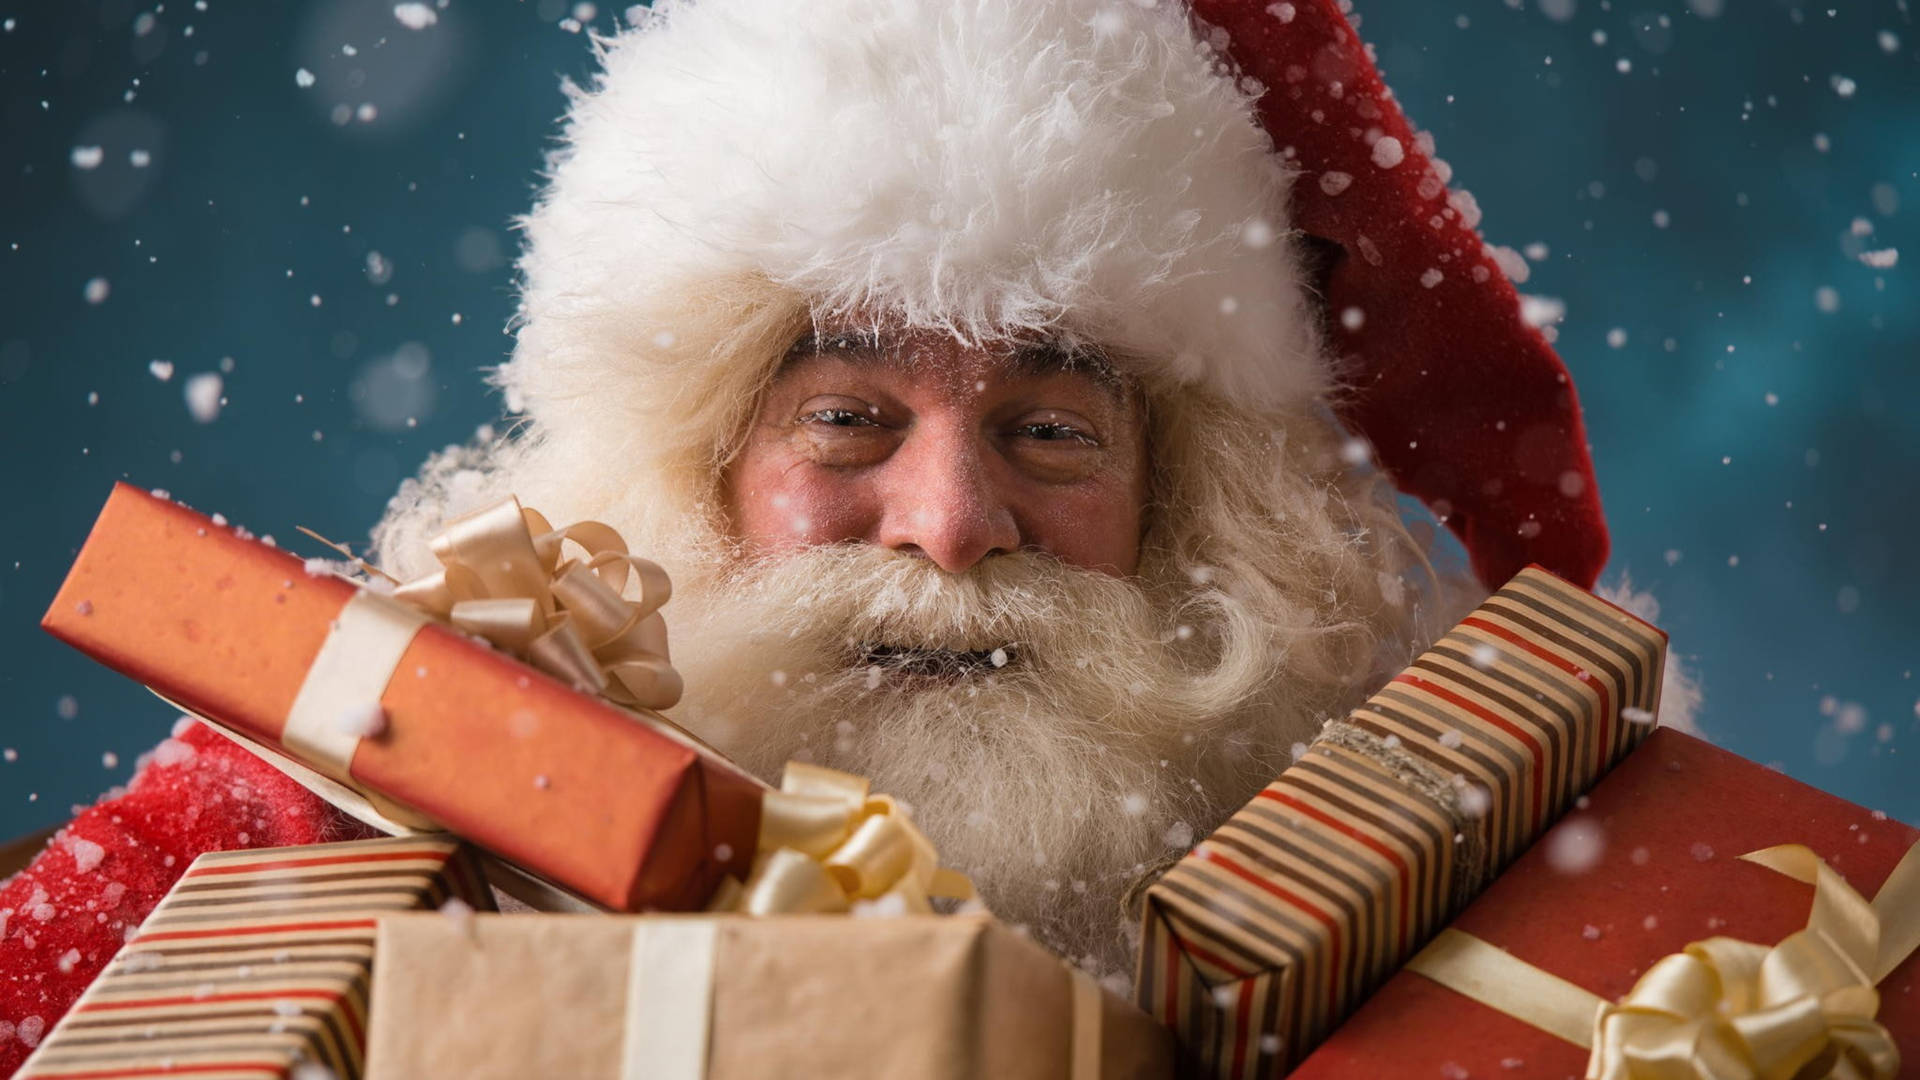 Santa Claus With Presents Wallpaper